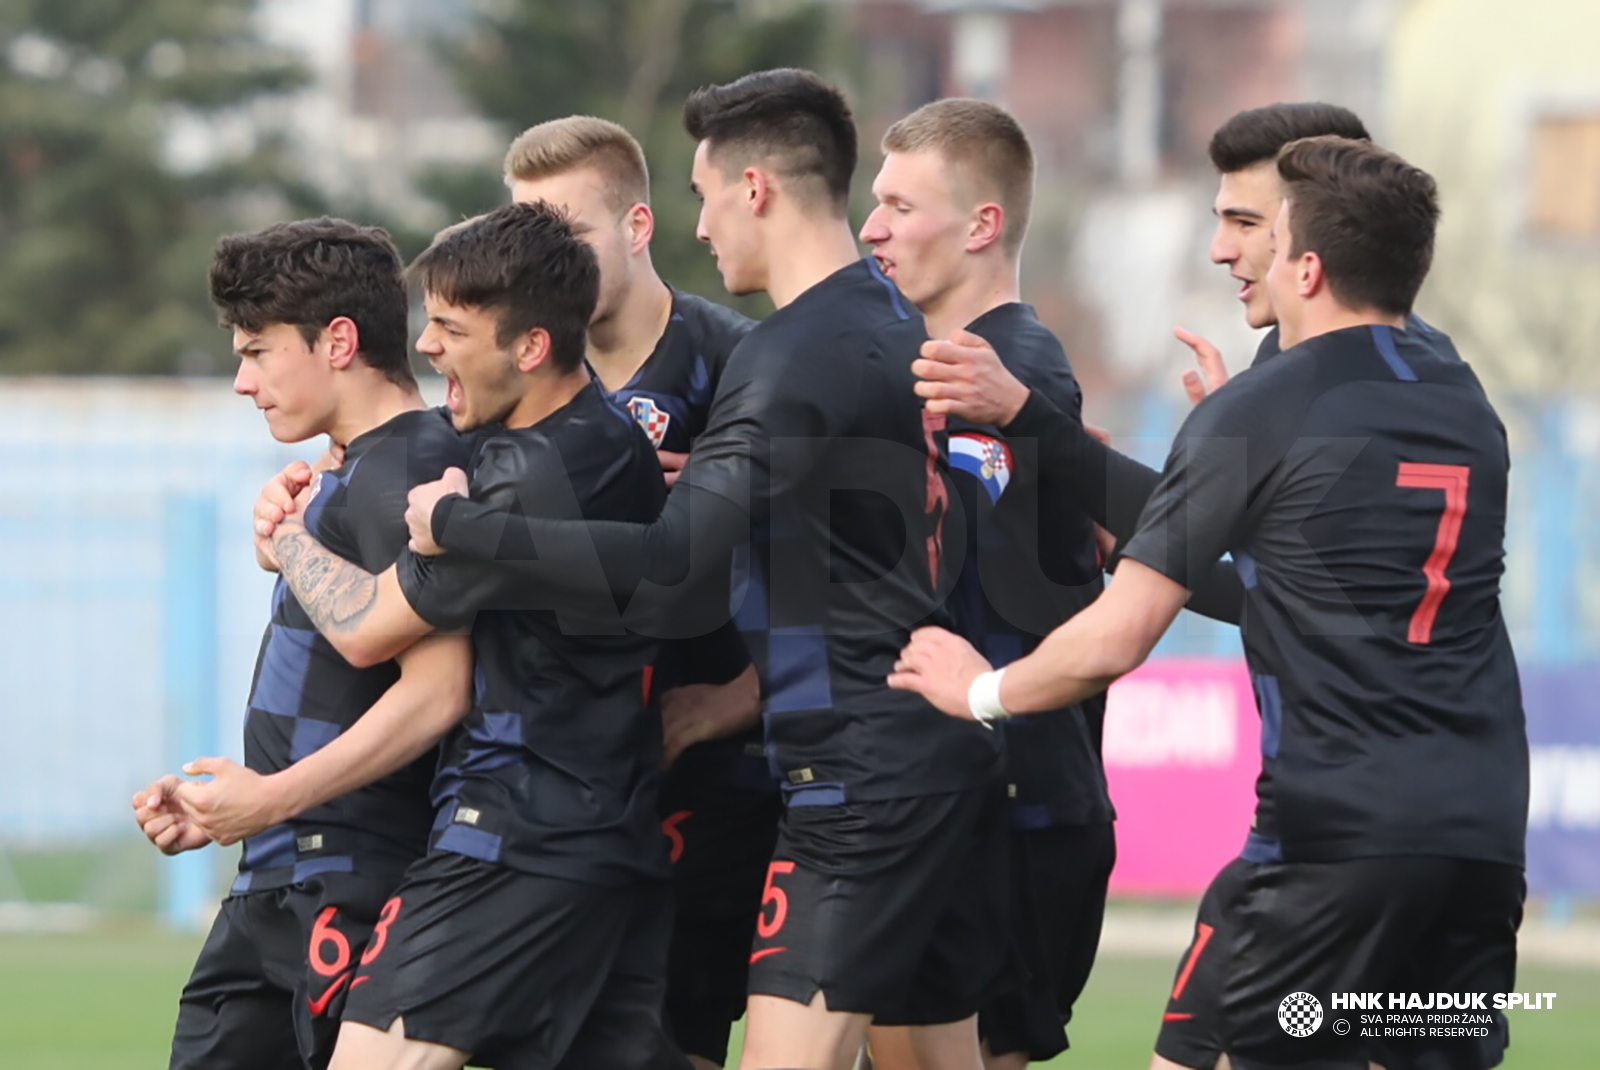 Hajduk U-19 qualified to the First Croatian League • HNK Hajduk Split